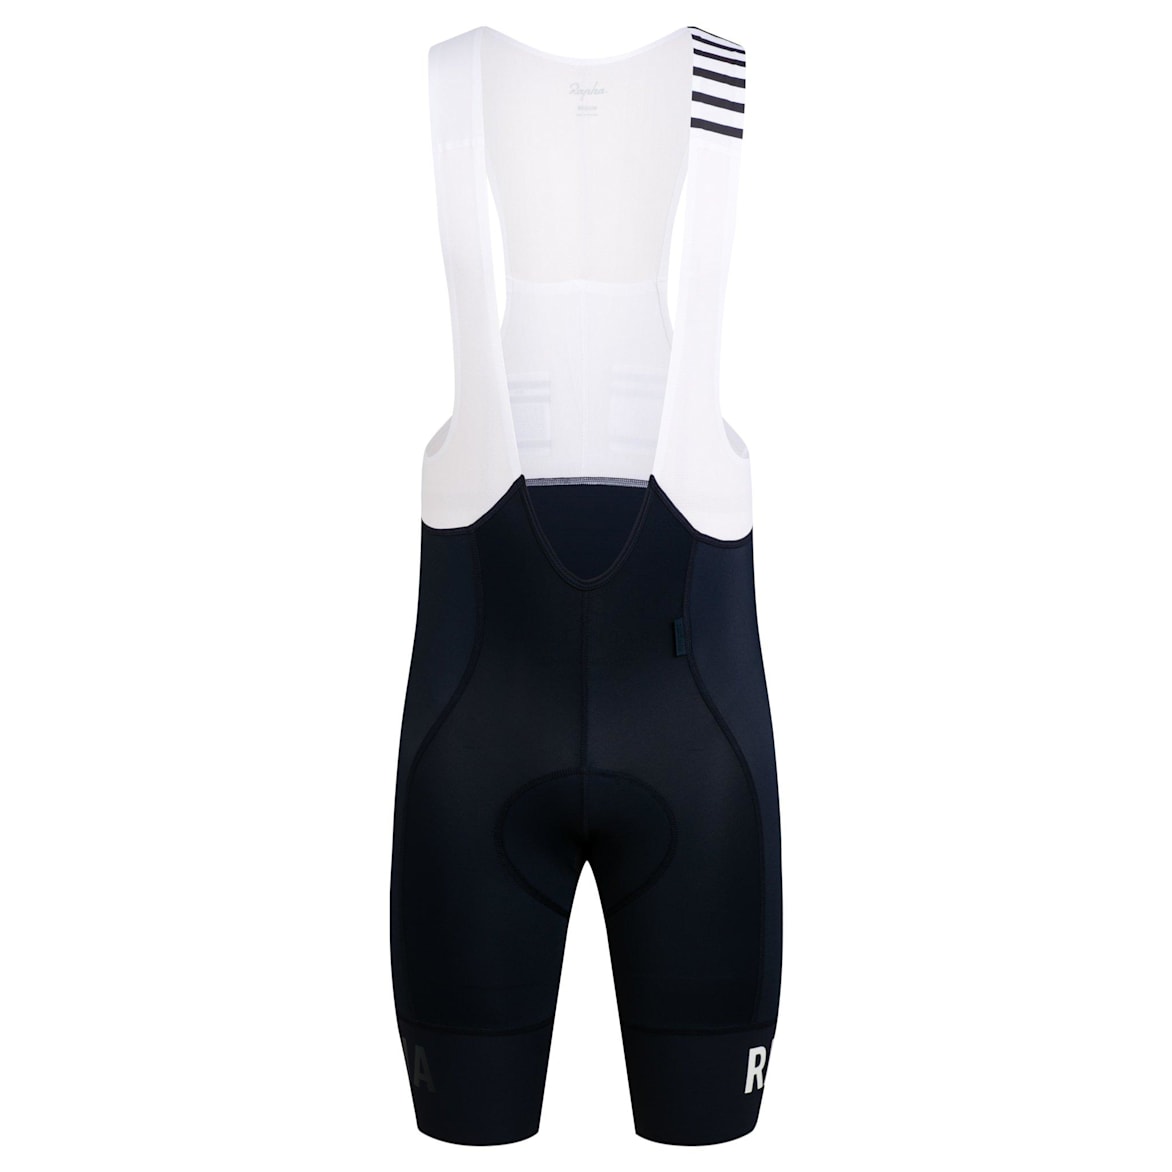 Mens - Bib Shorts, Bib Tights, Cycling Bibs & Cycling Shorts - Pearson1860